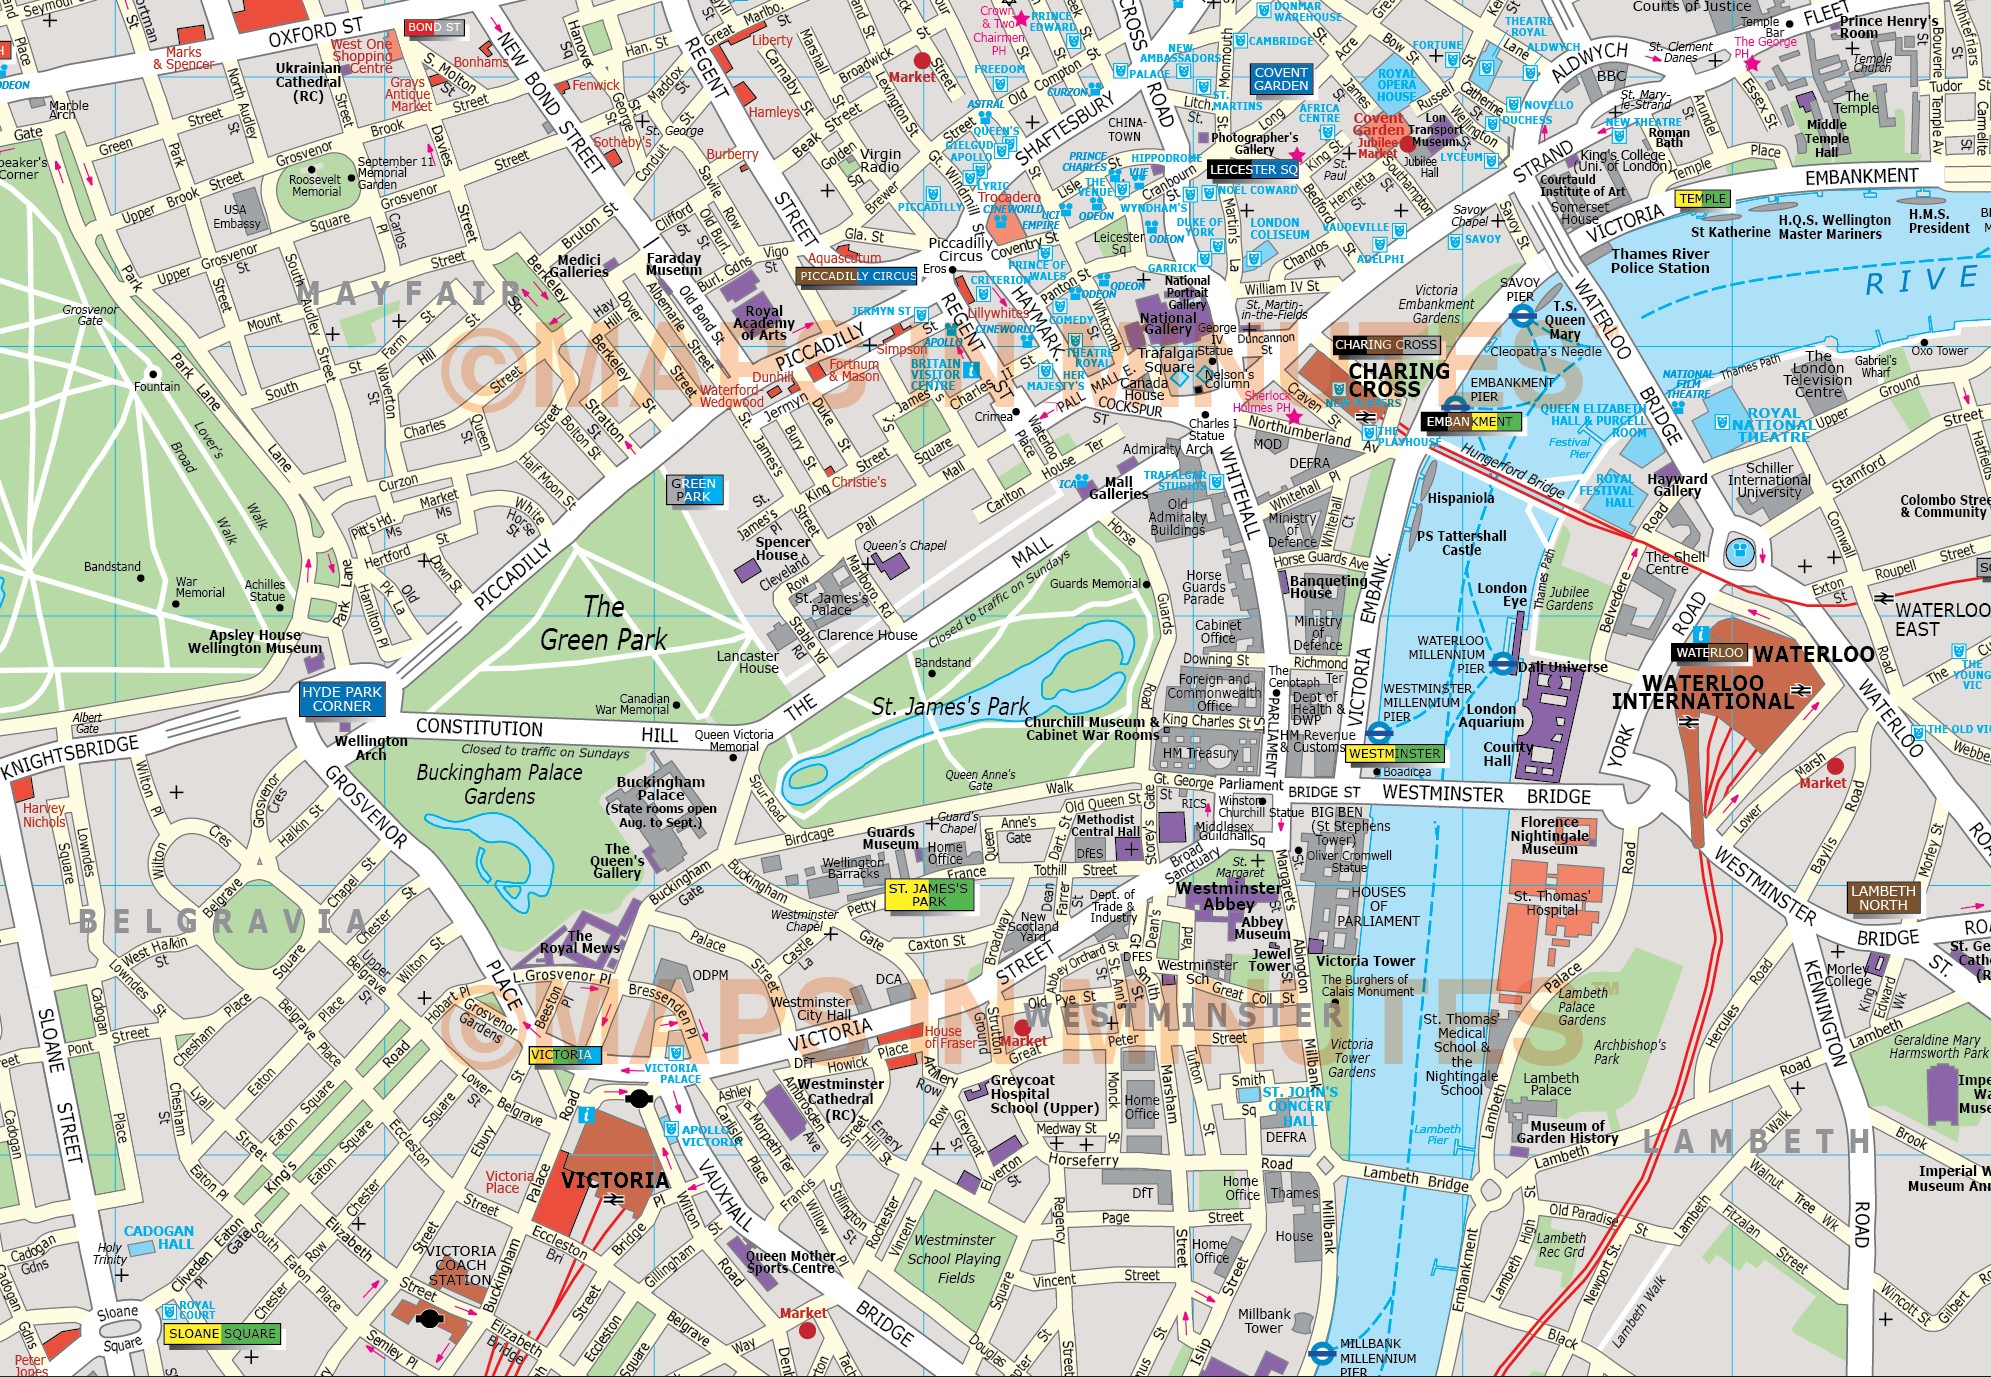 deluxe-london-city-map-in-illustrator-editable-vector-format